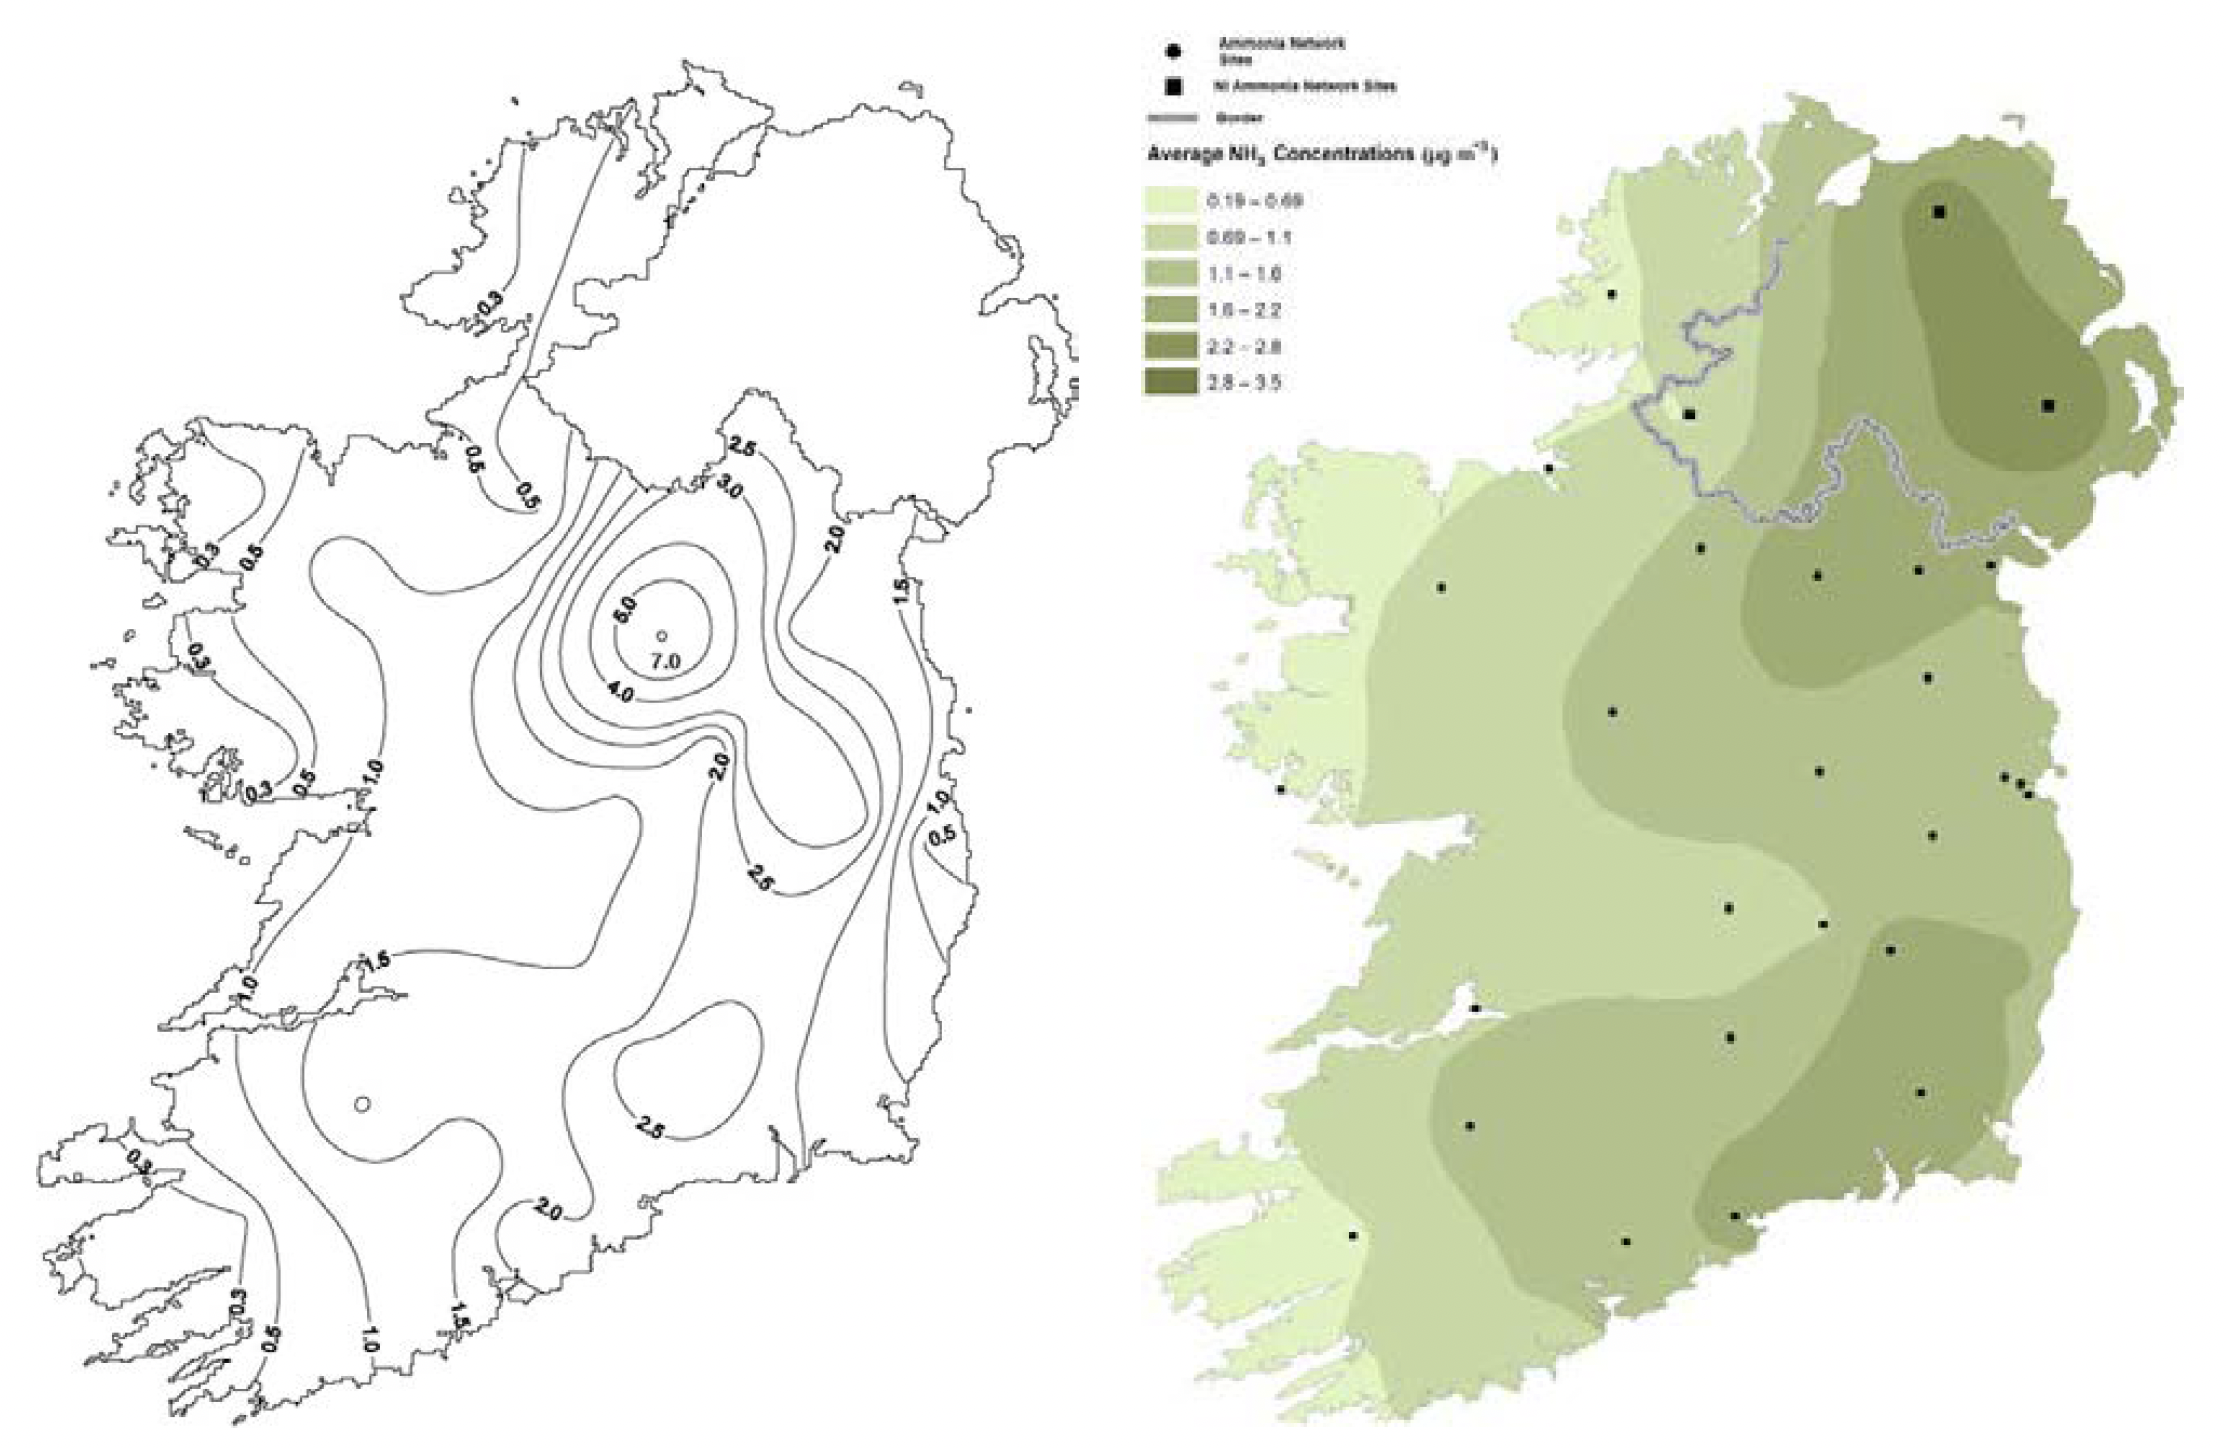 Ammonia 1, Ammonia 2 concentrations maps, Ireland